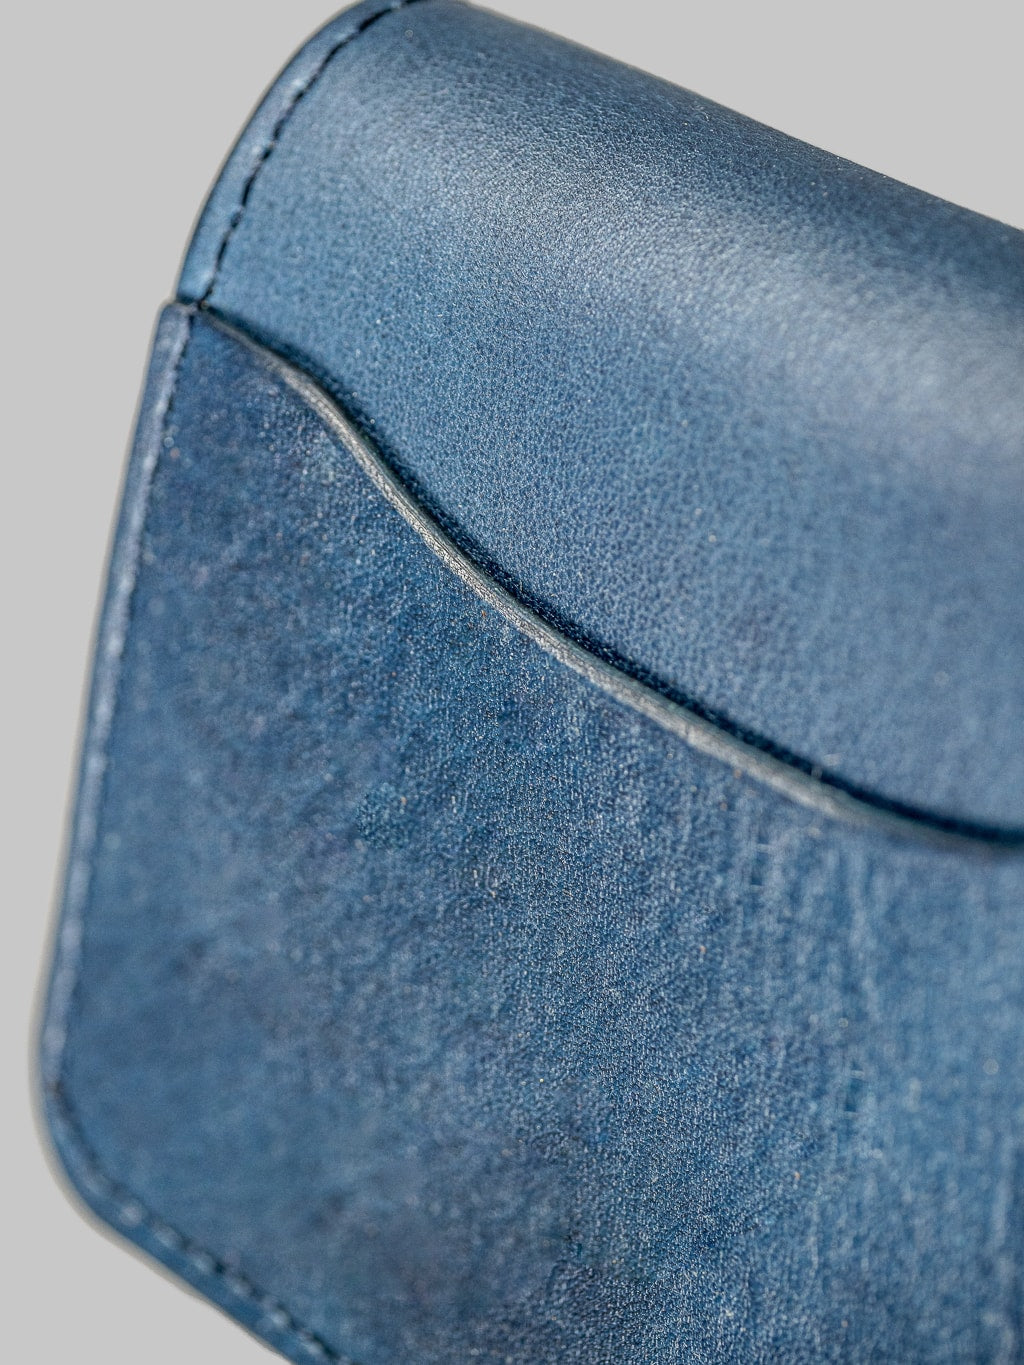 Studio Dartisan indigo leather mini wallet back pocket